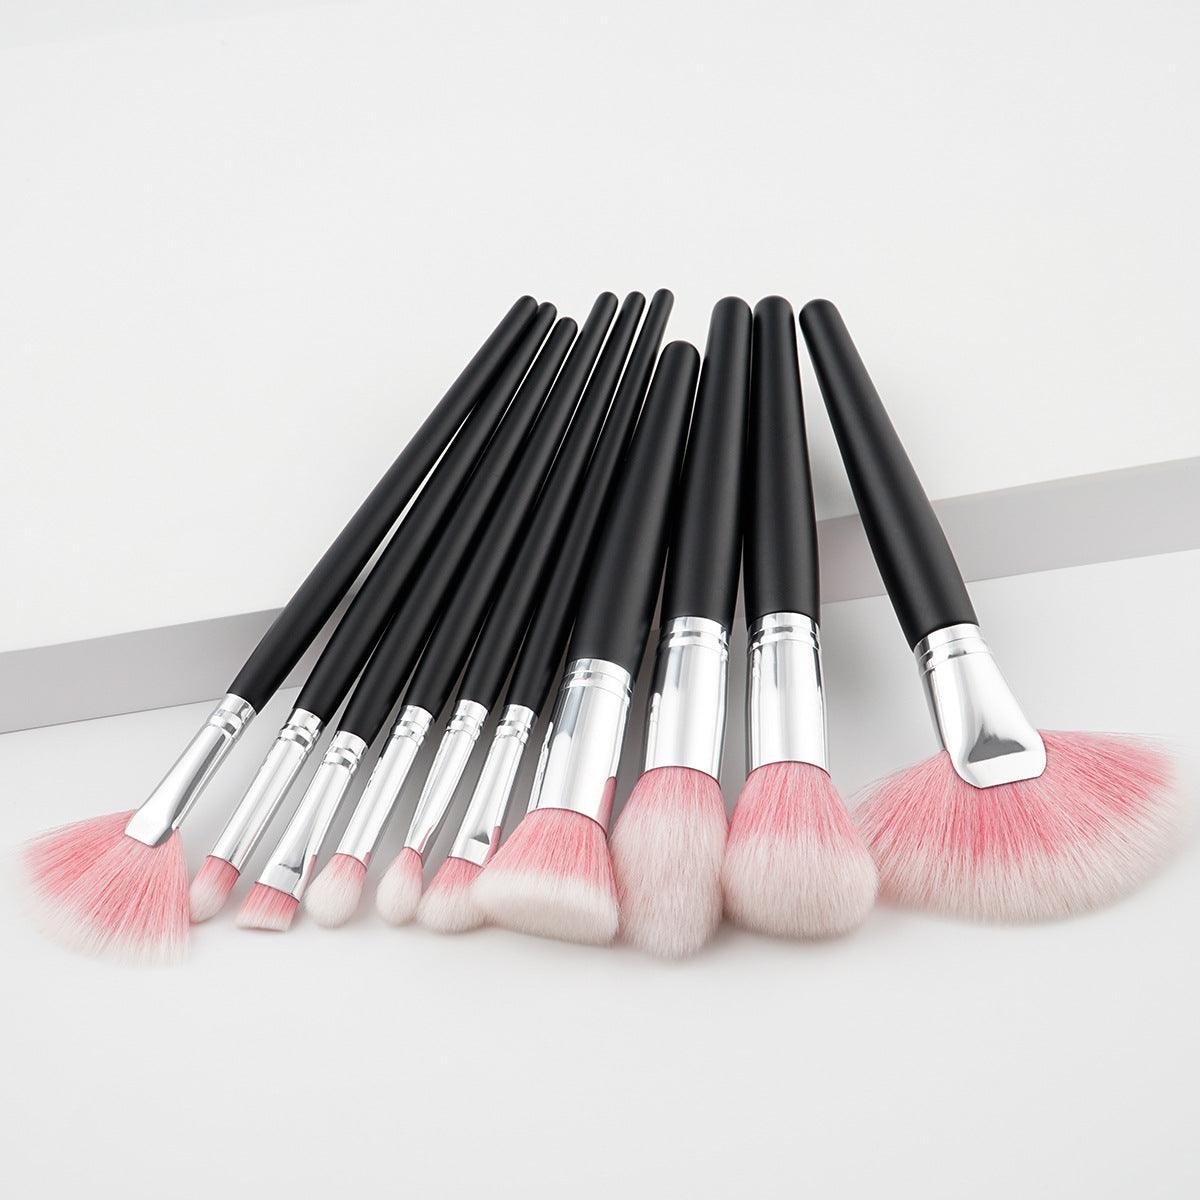 10 beauty makeup brushes - Nioor